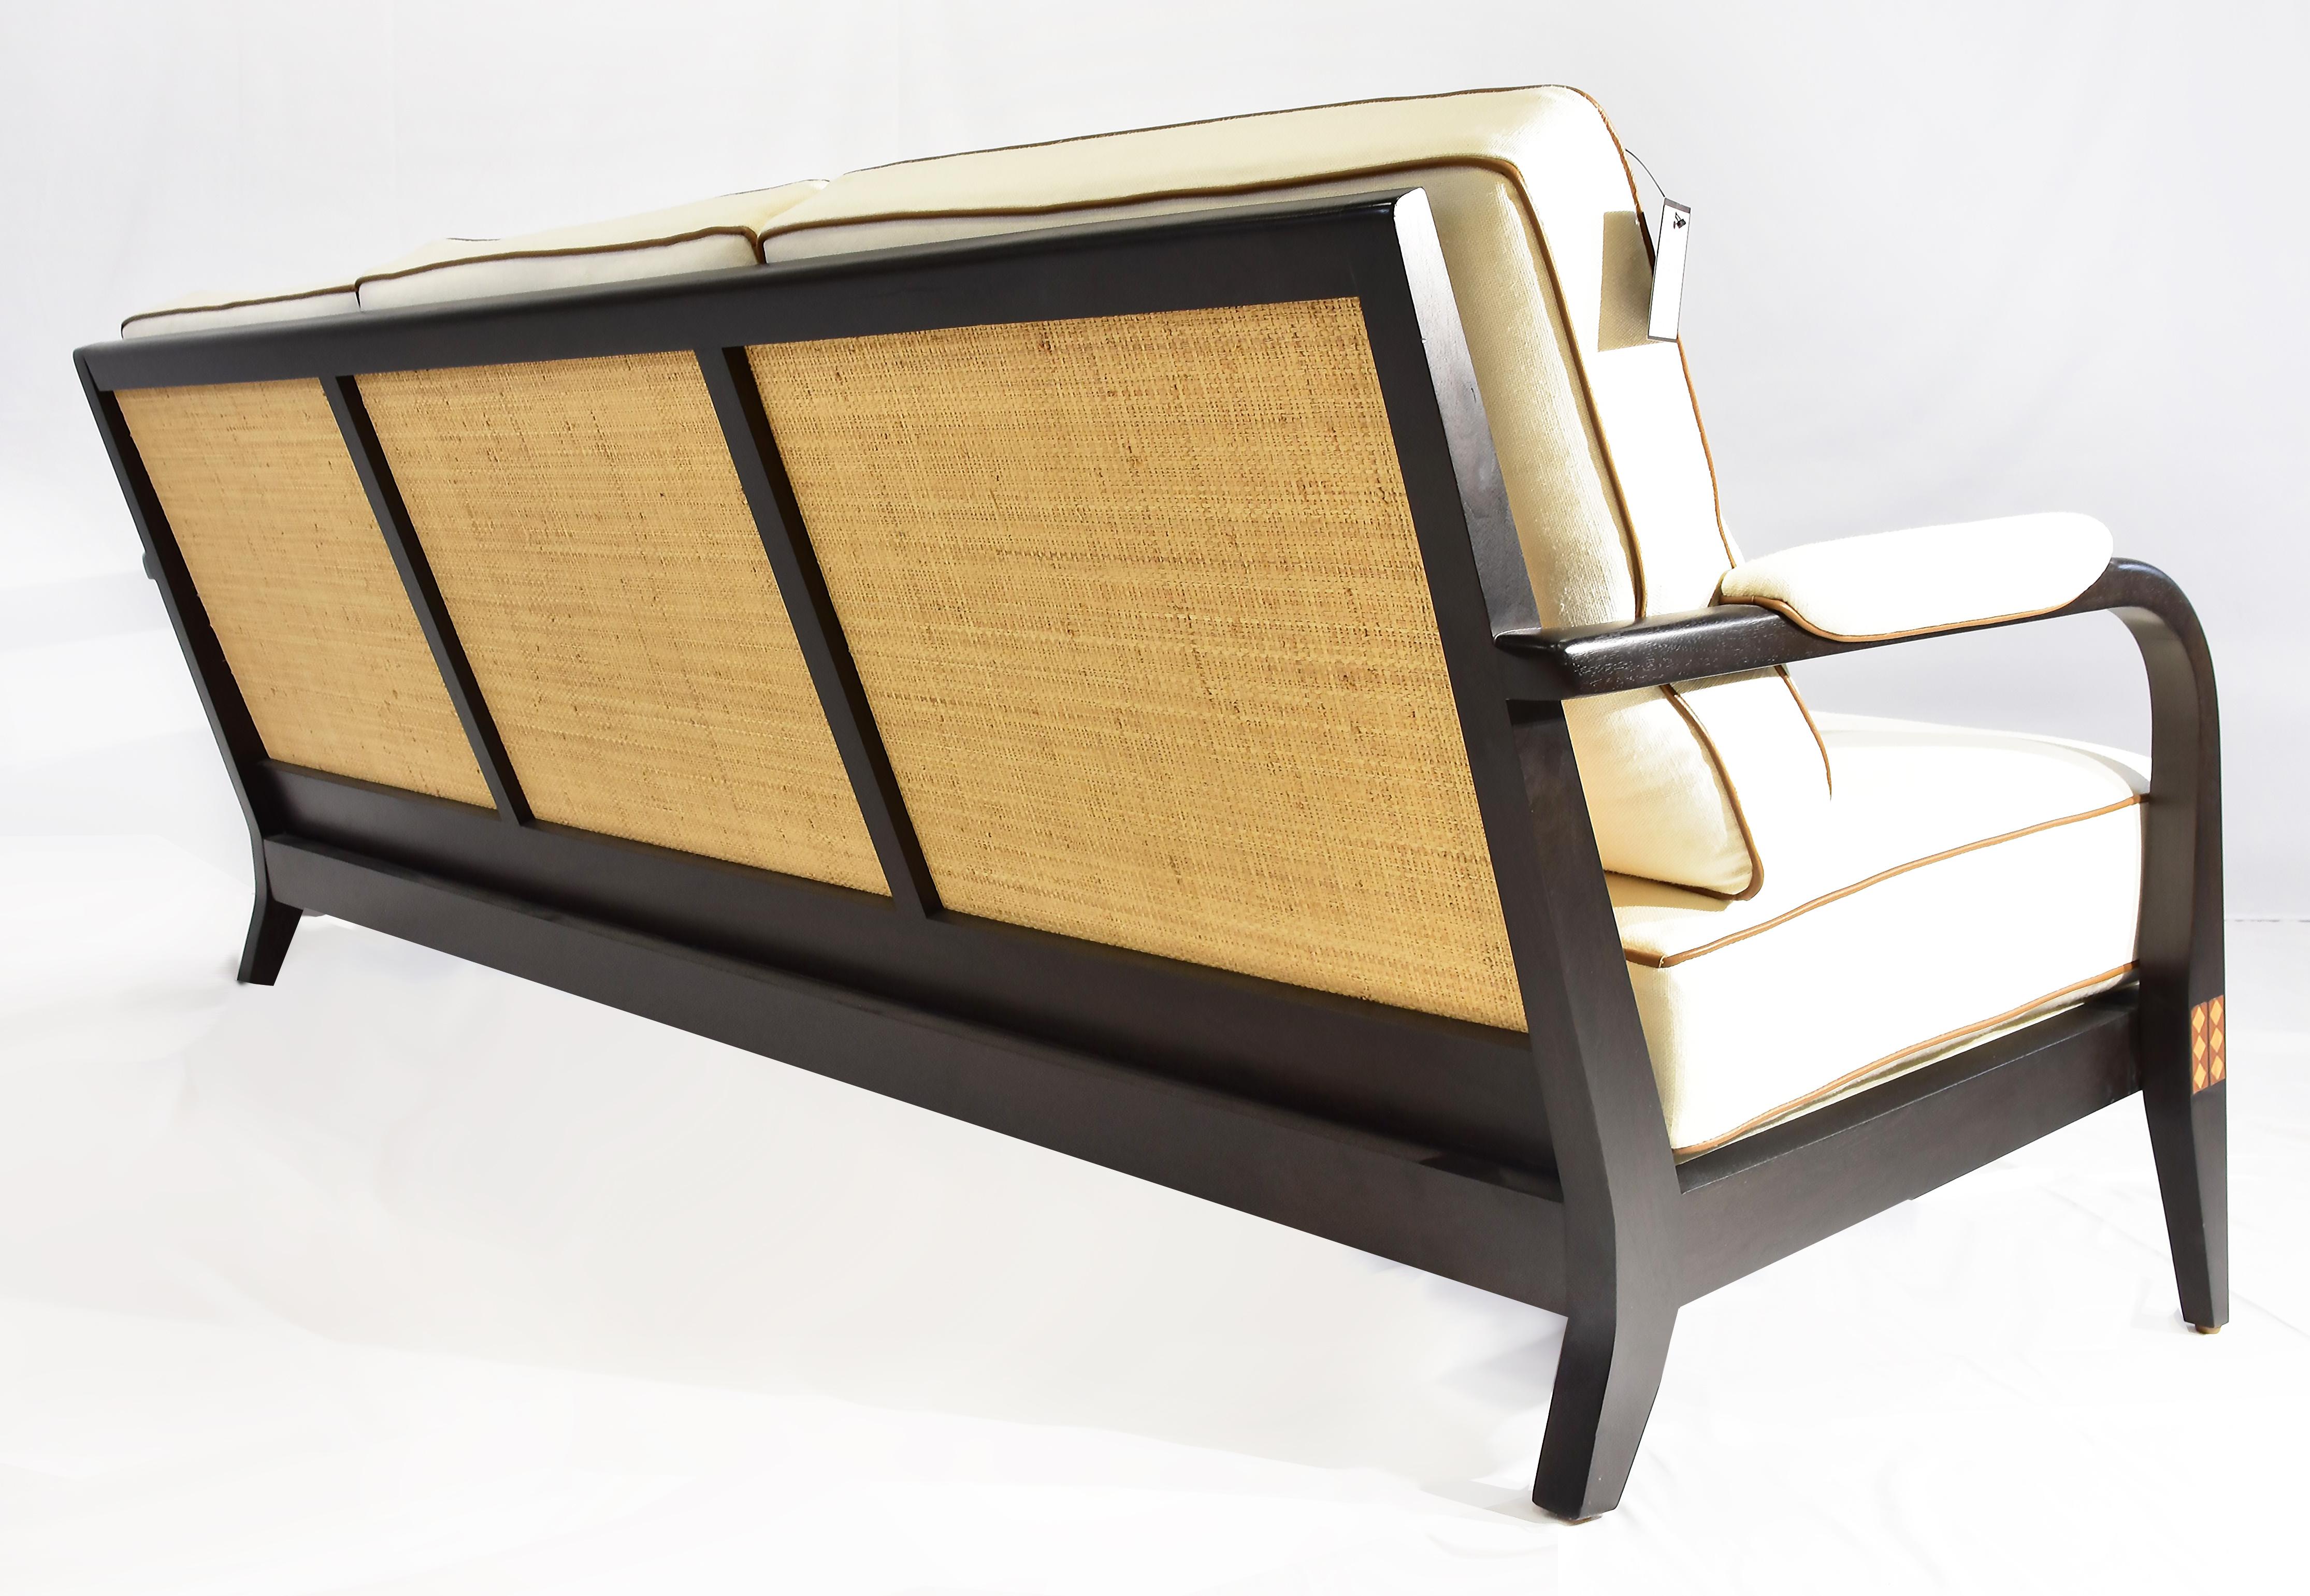 Le June Upholstery 3 Seat Club Havana Sofa Floor Model, Walnut Finished Mahogany For Sale 2